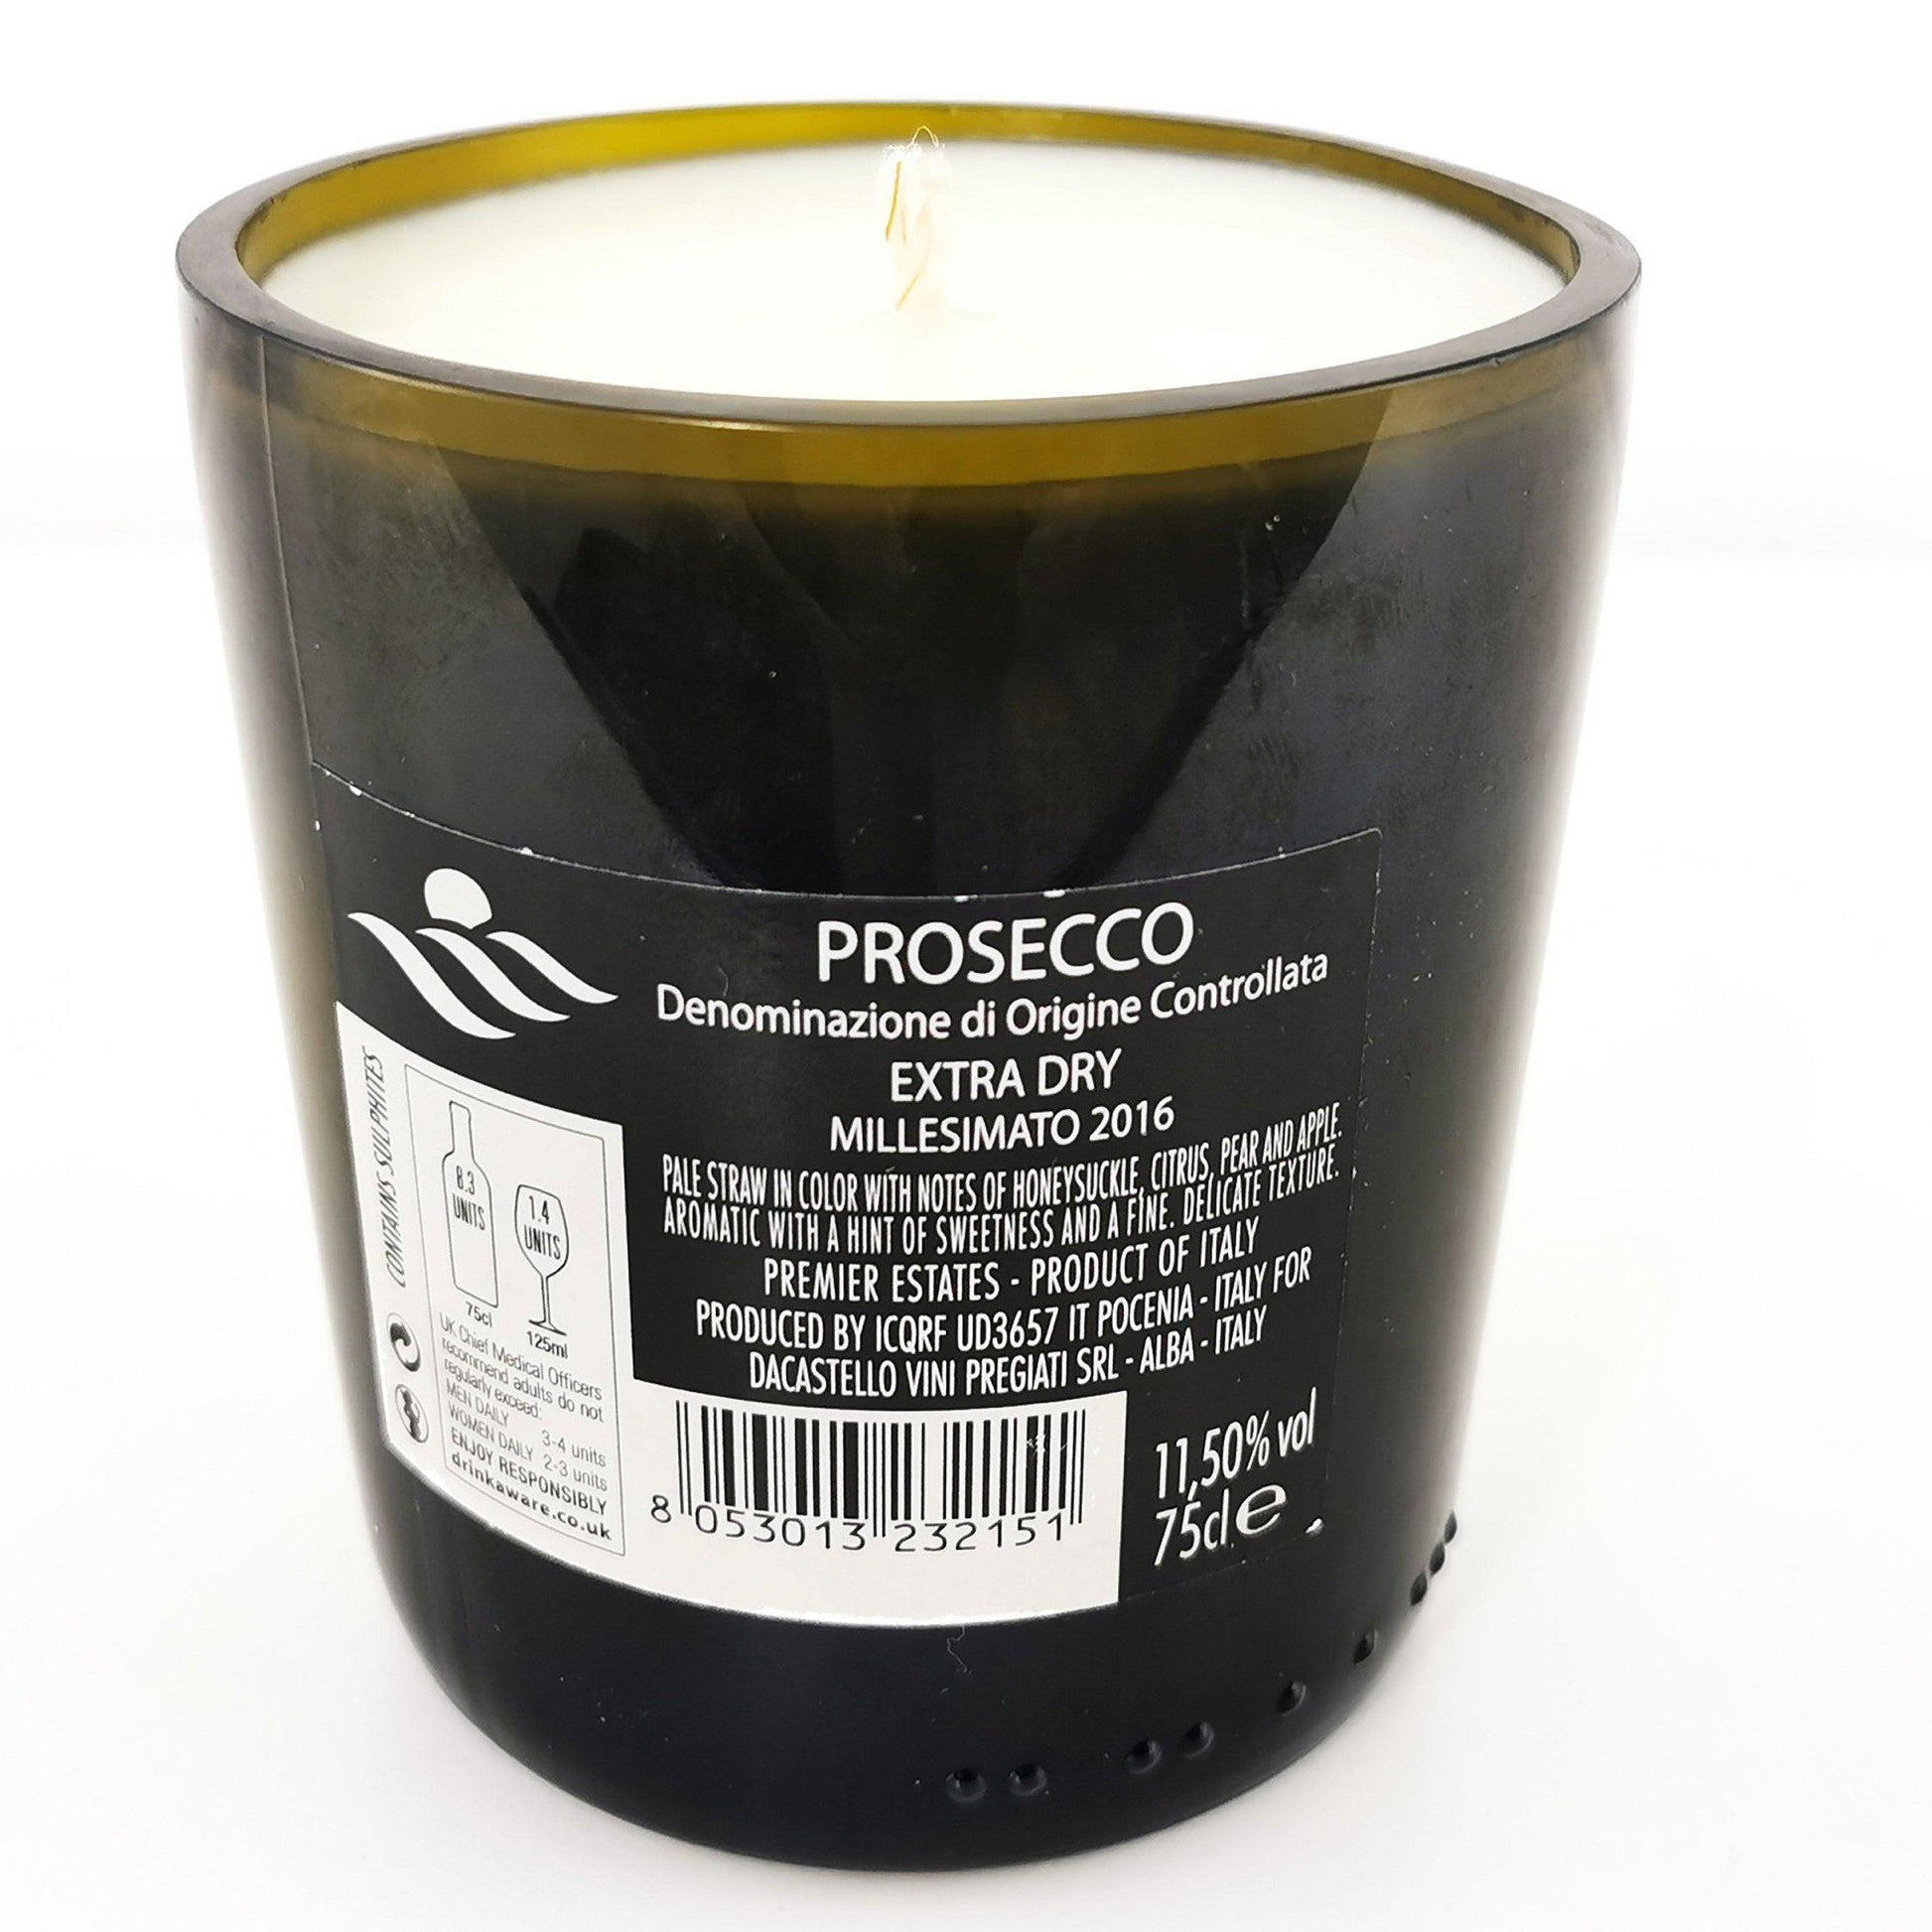 Premier Estates Prosecco Bottle Candle-Wine & Prosecco Bottle Candles-Adhock Homeware